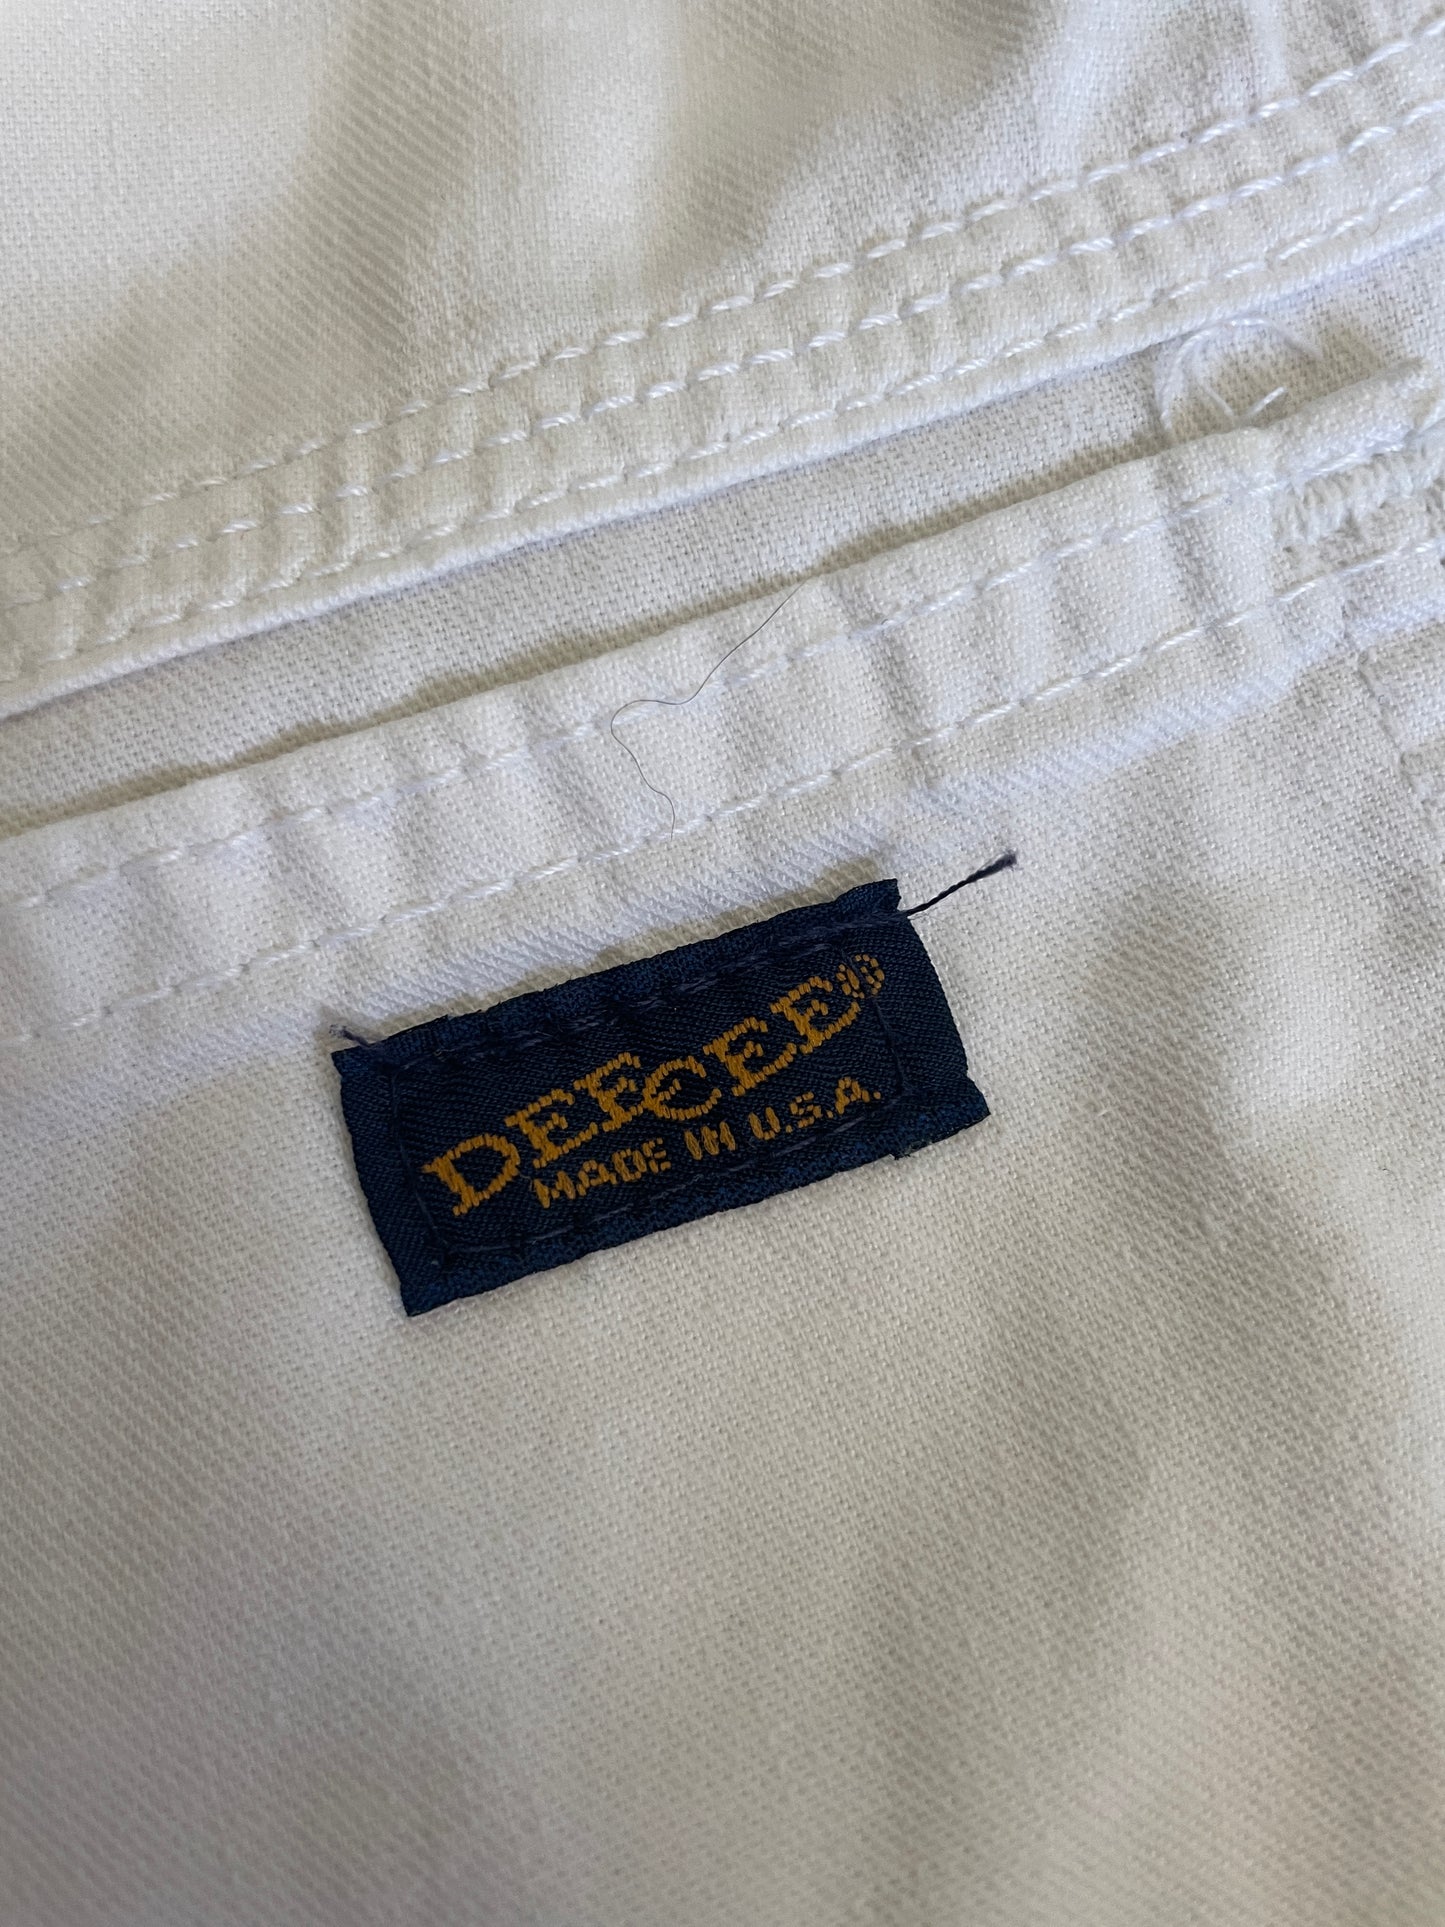 80s White DeeCee Carpenter Pants